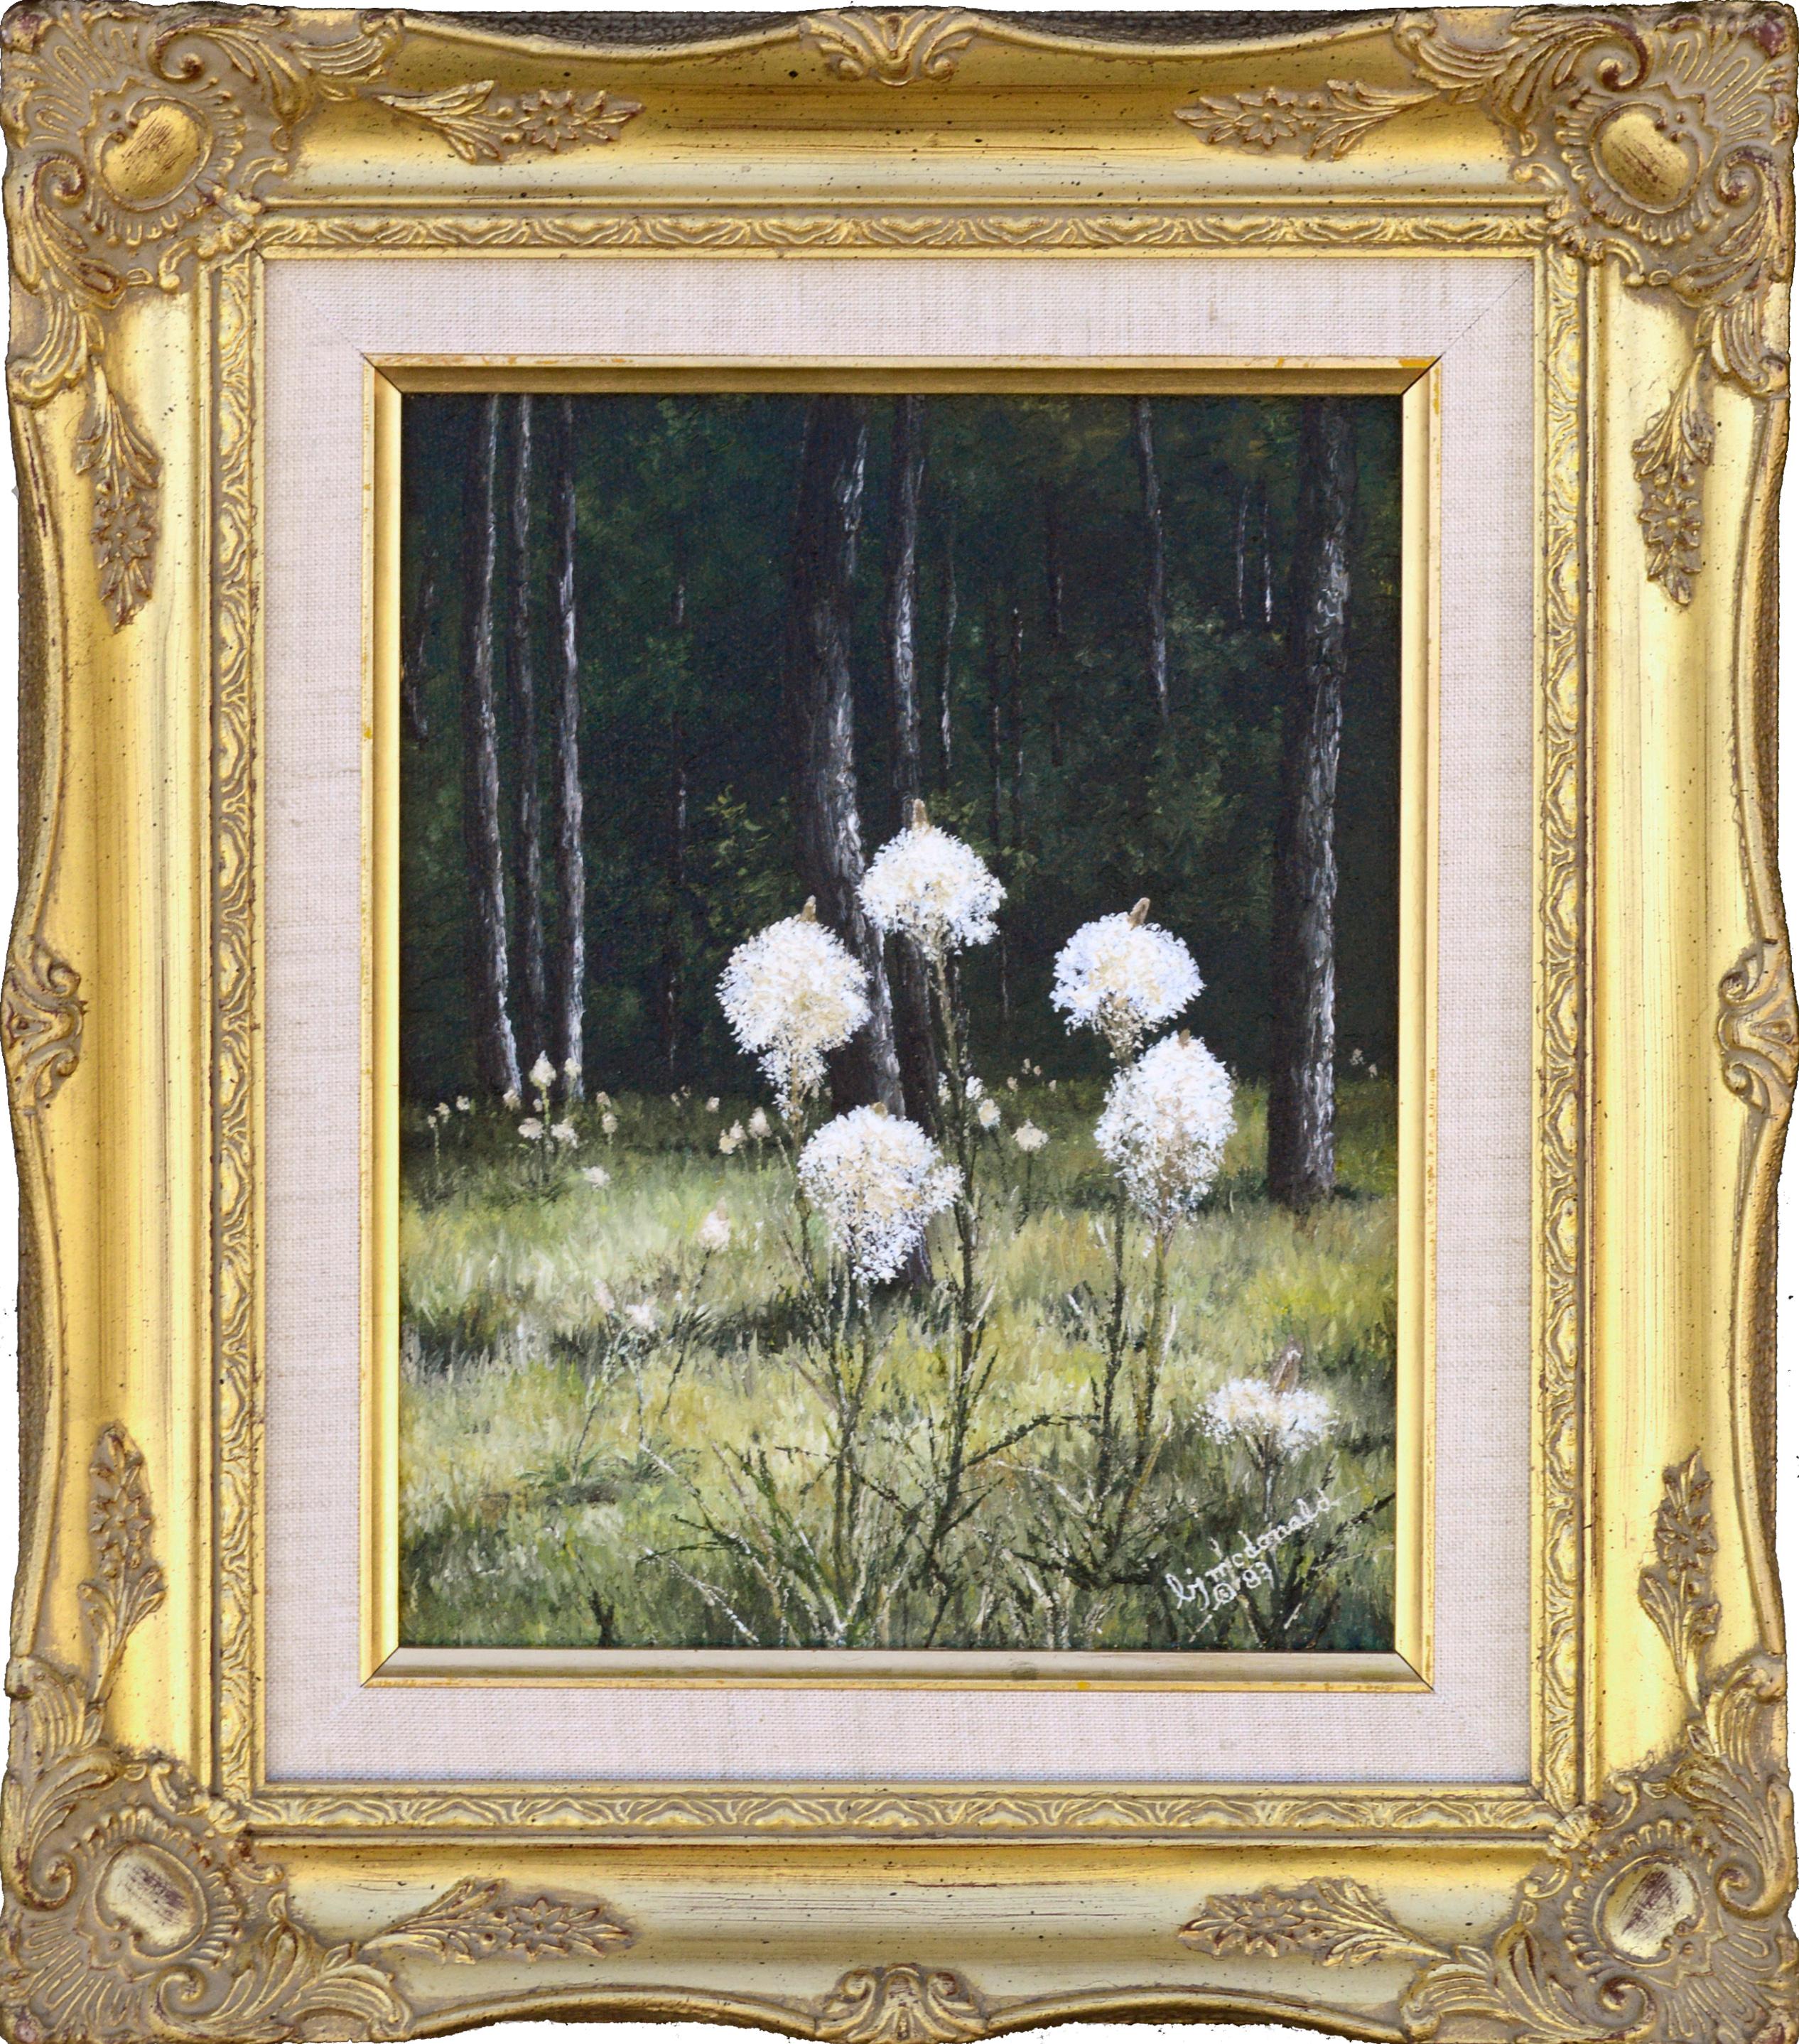 BJ McDonald Landscape Painting - "Swan Country Bear Grass" - Landscape